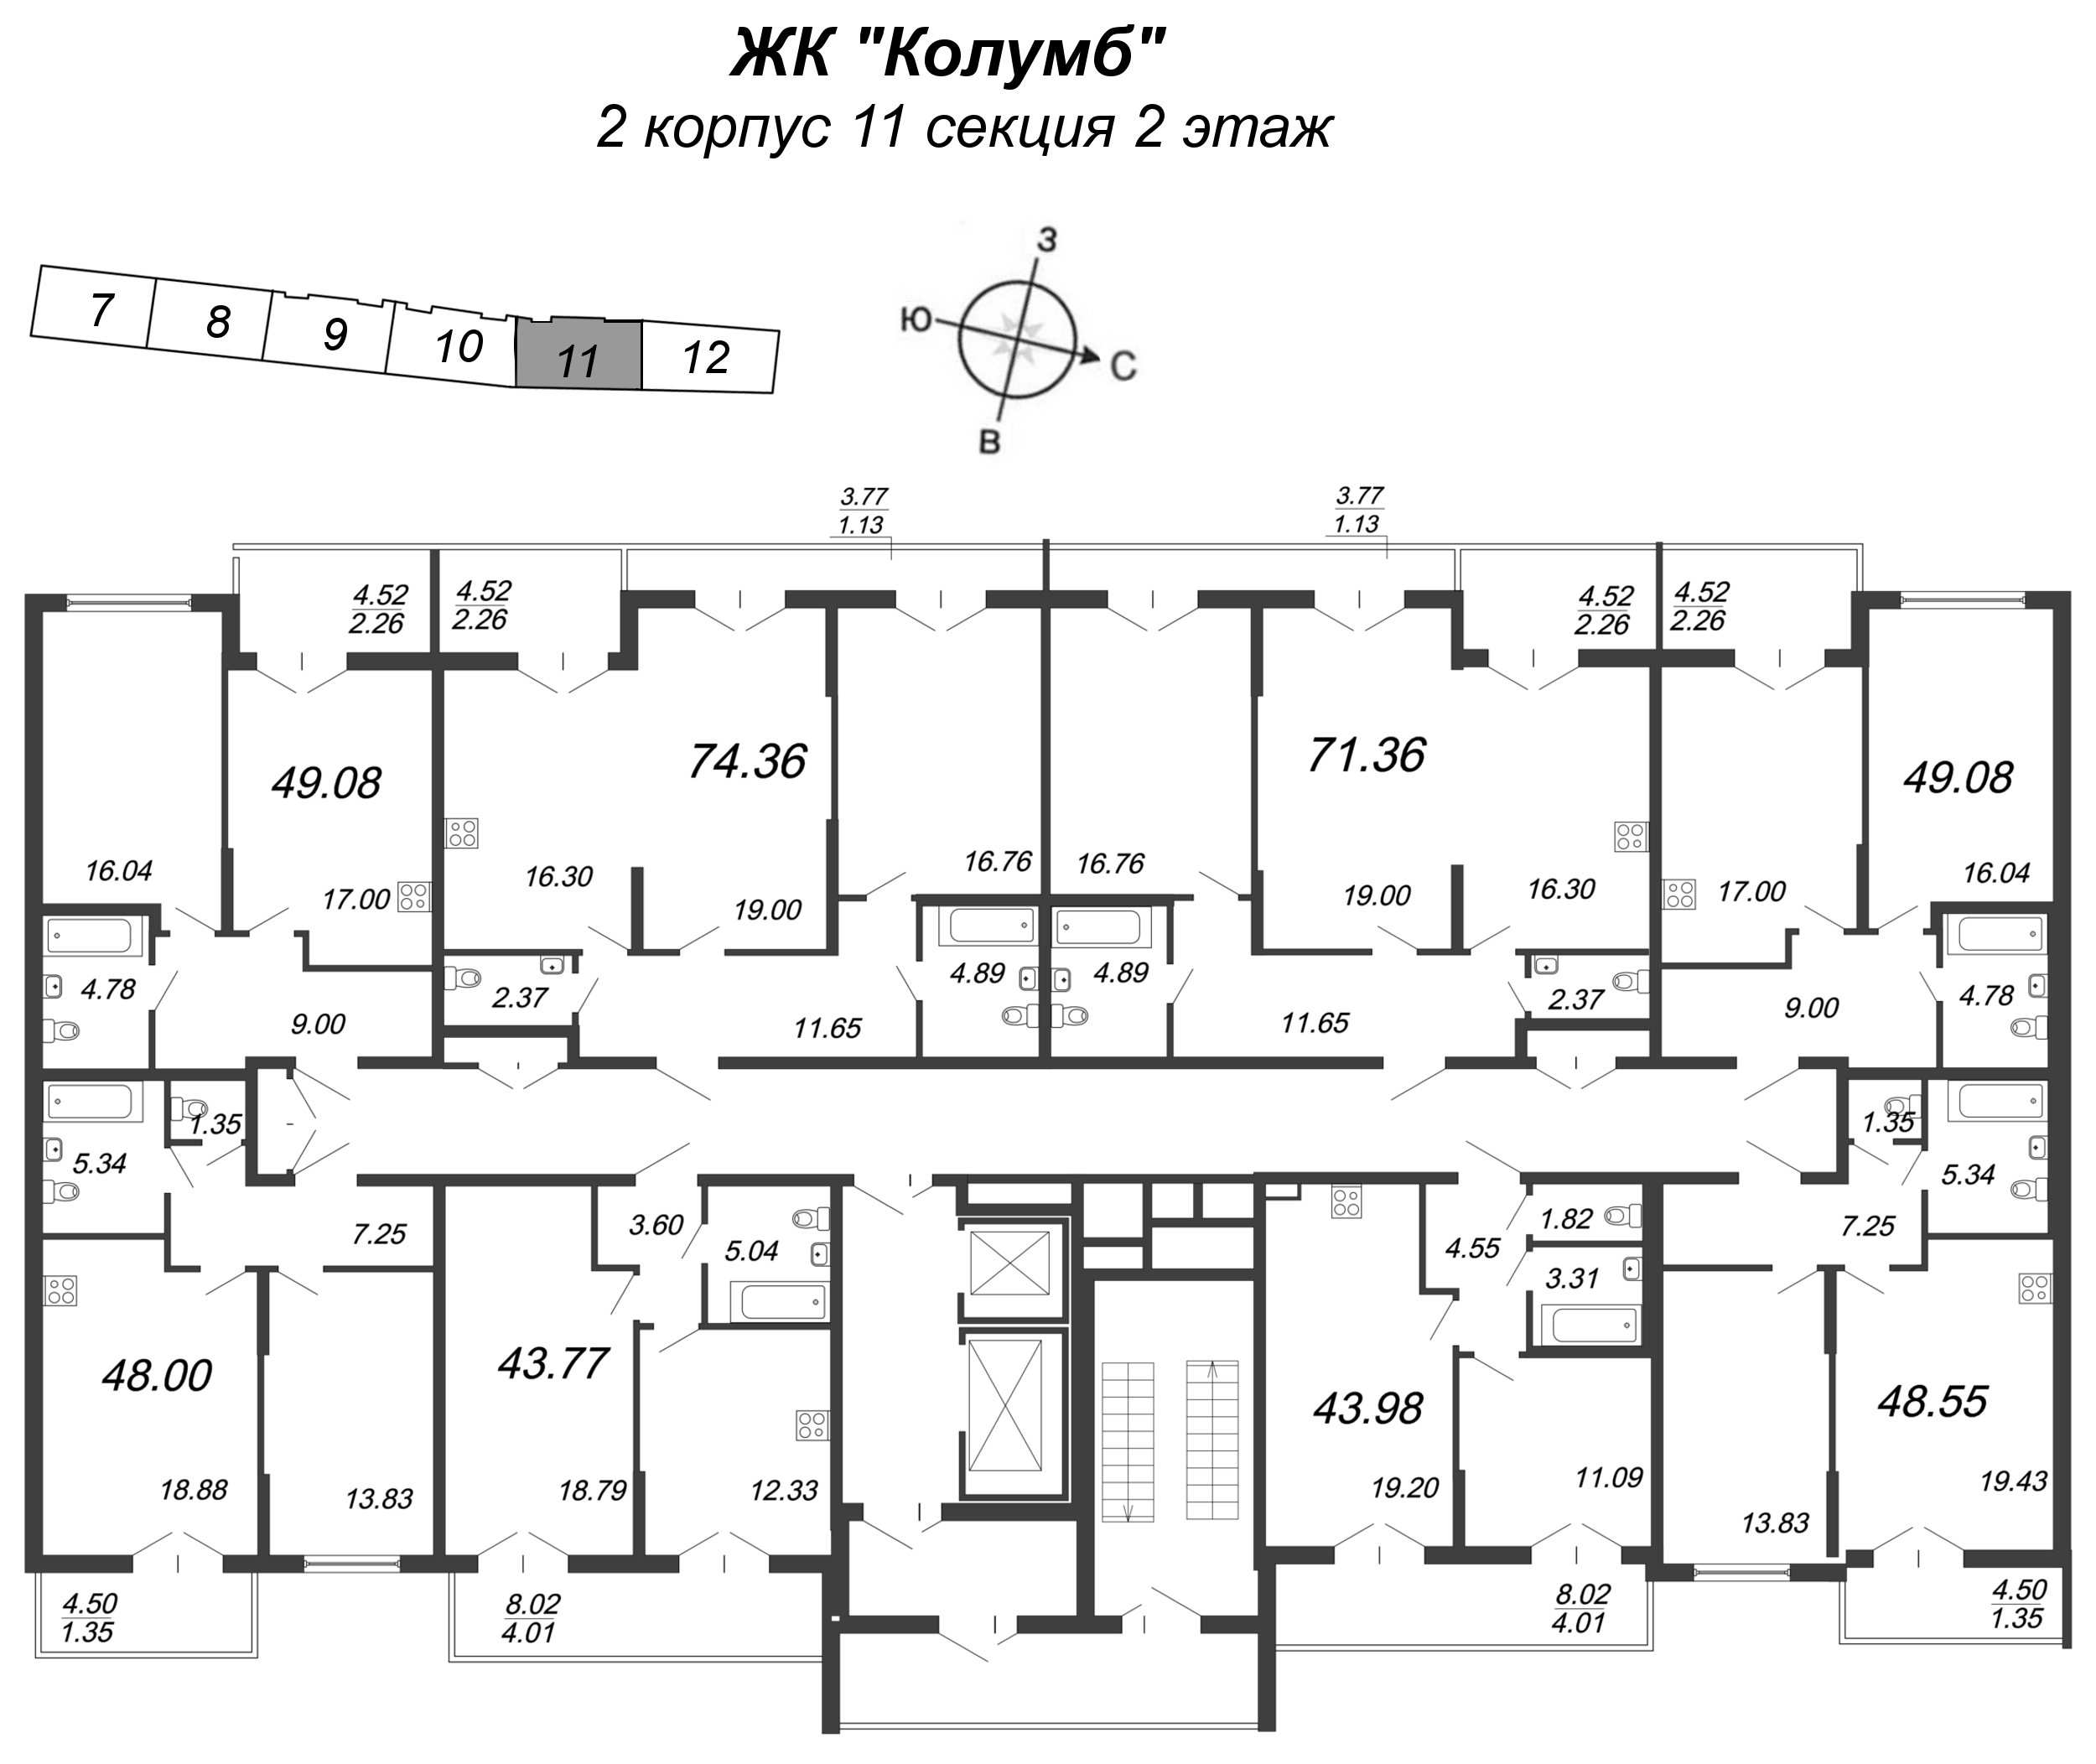 2-комнатная квартира, 74.2 м² в ЖК "Колумб" - планировка этажа